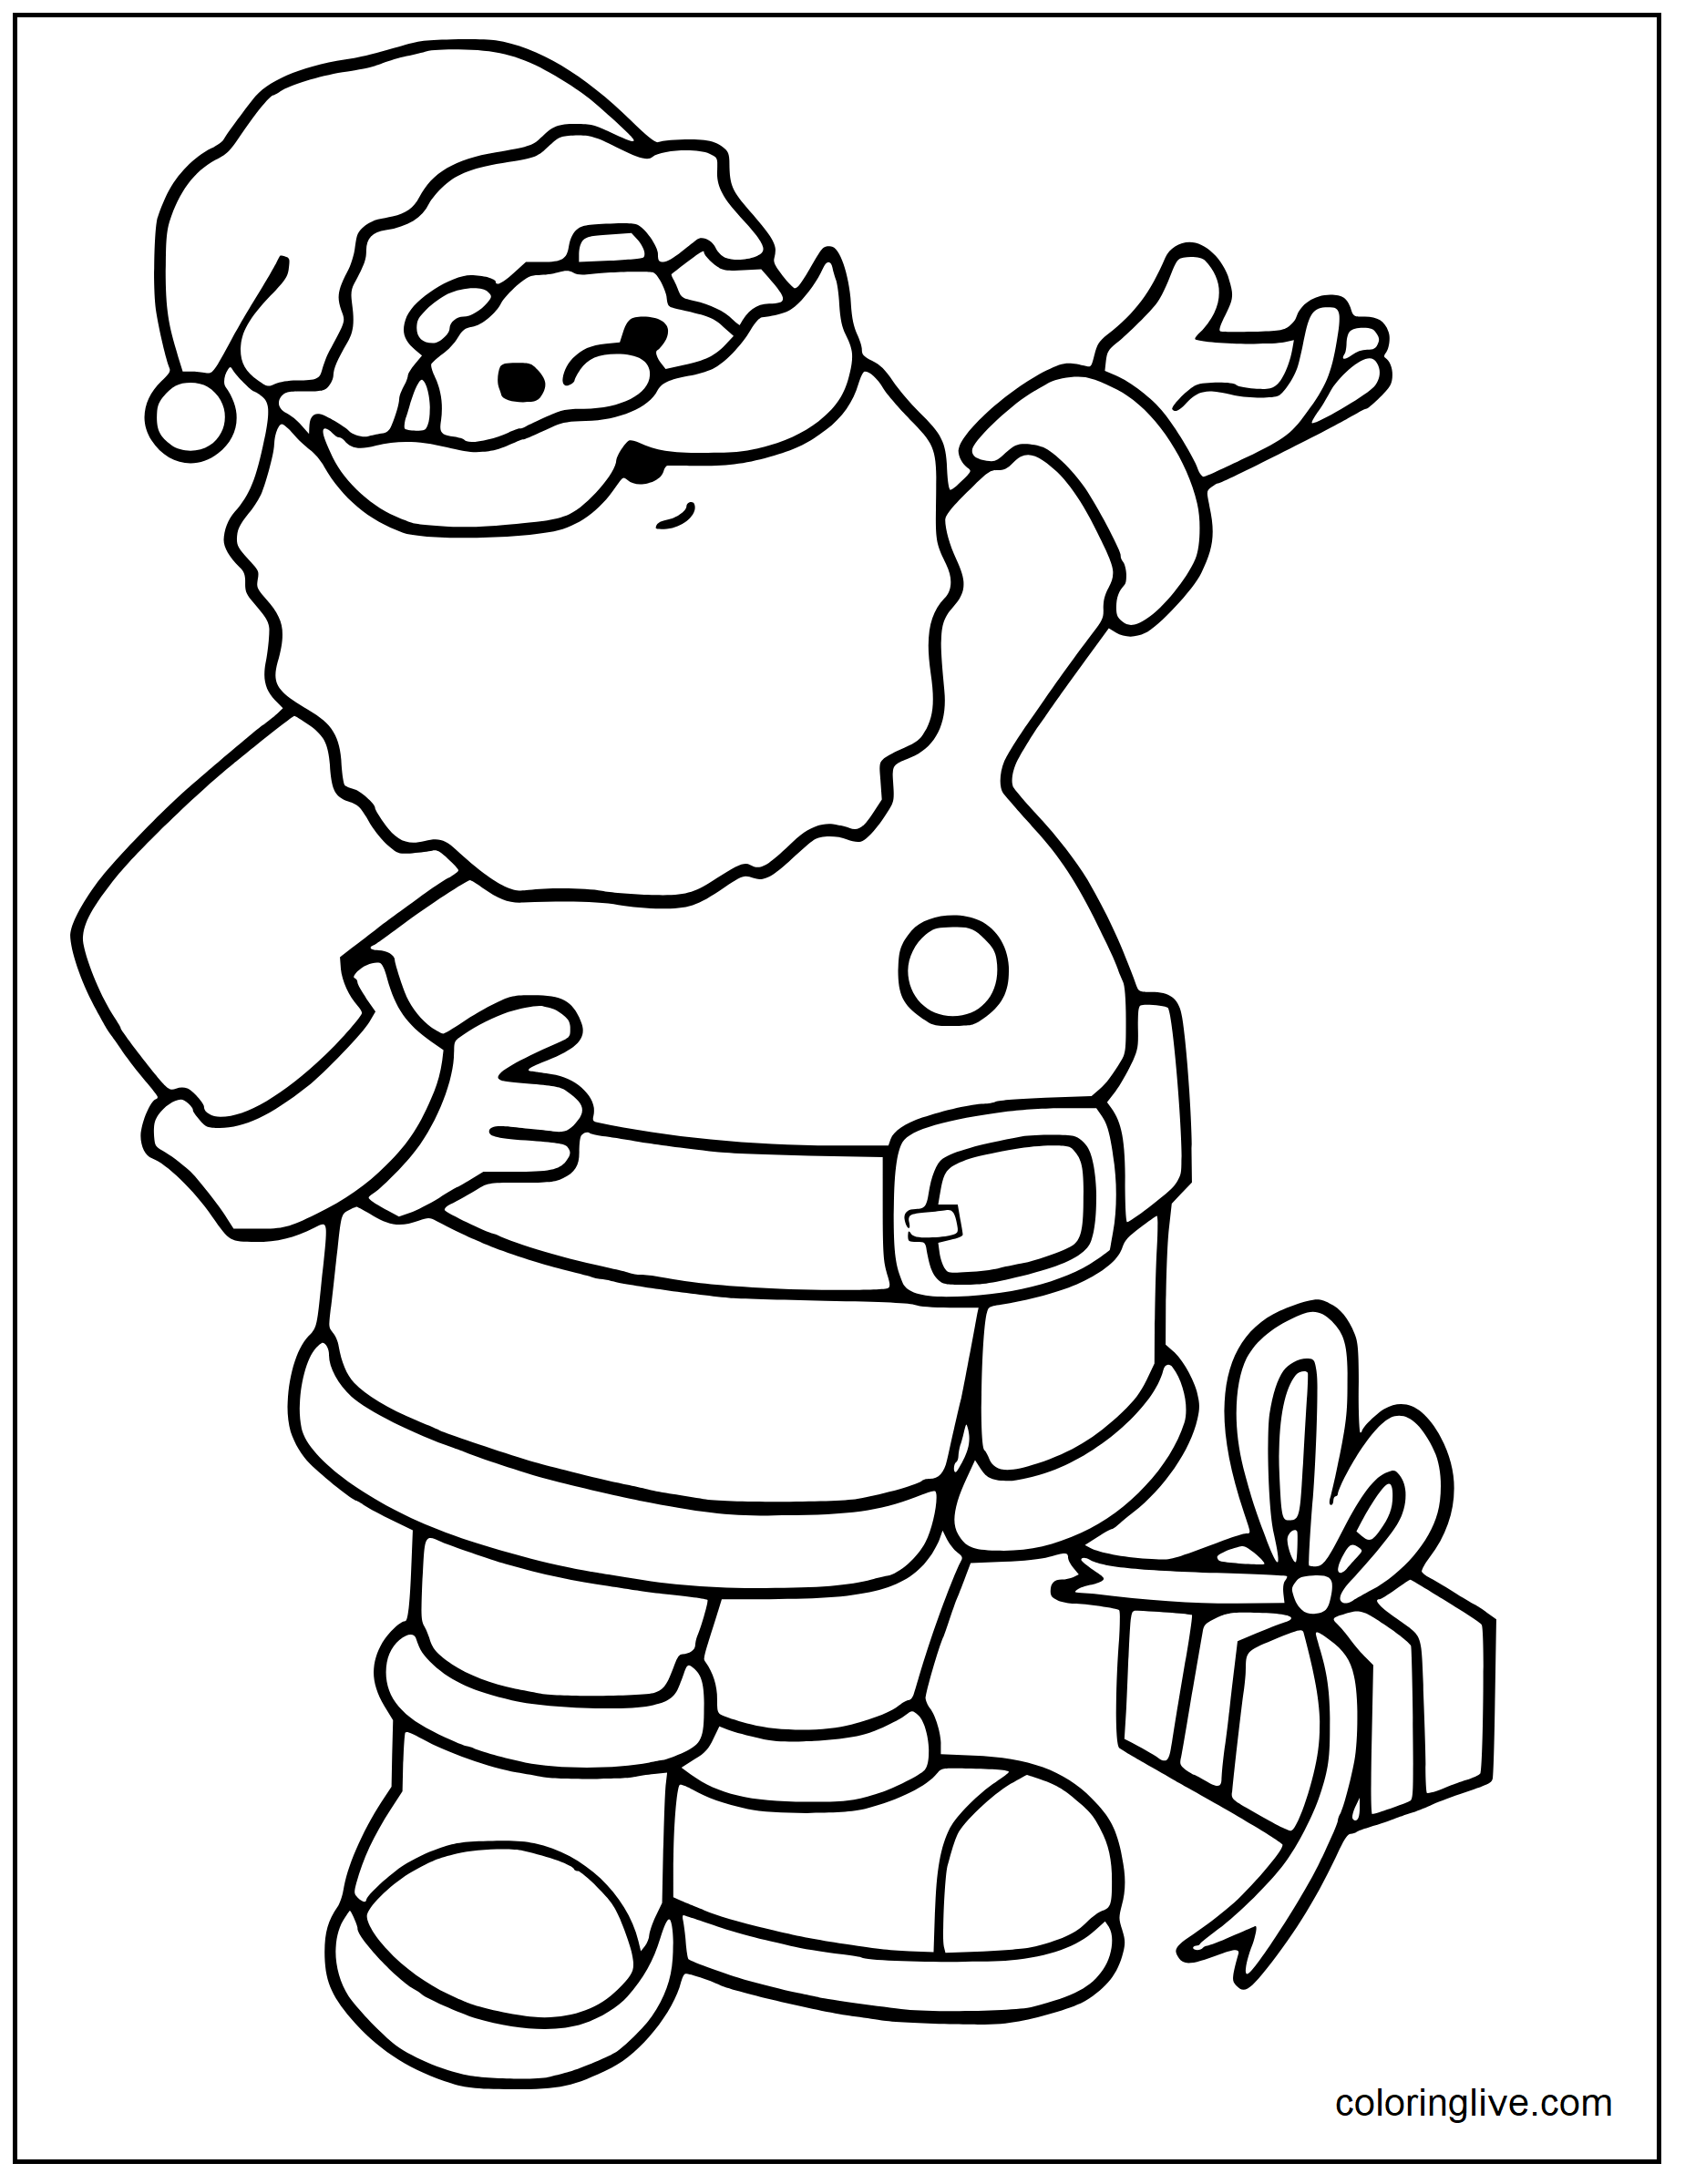 Printable santa  sheet Coloring Page for kids.